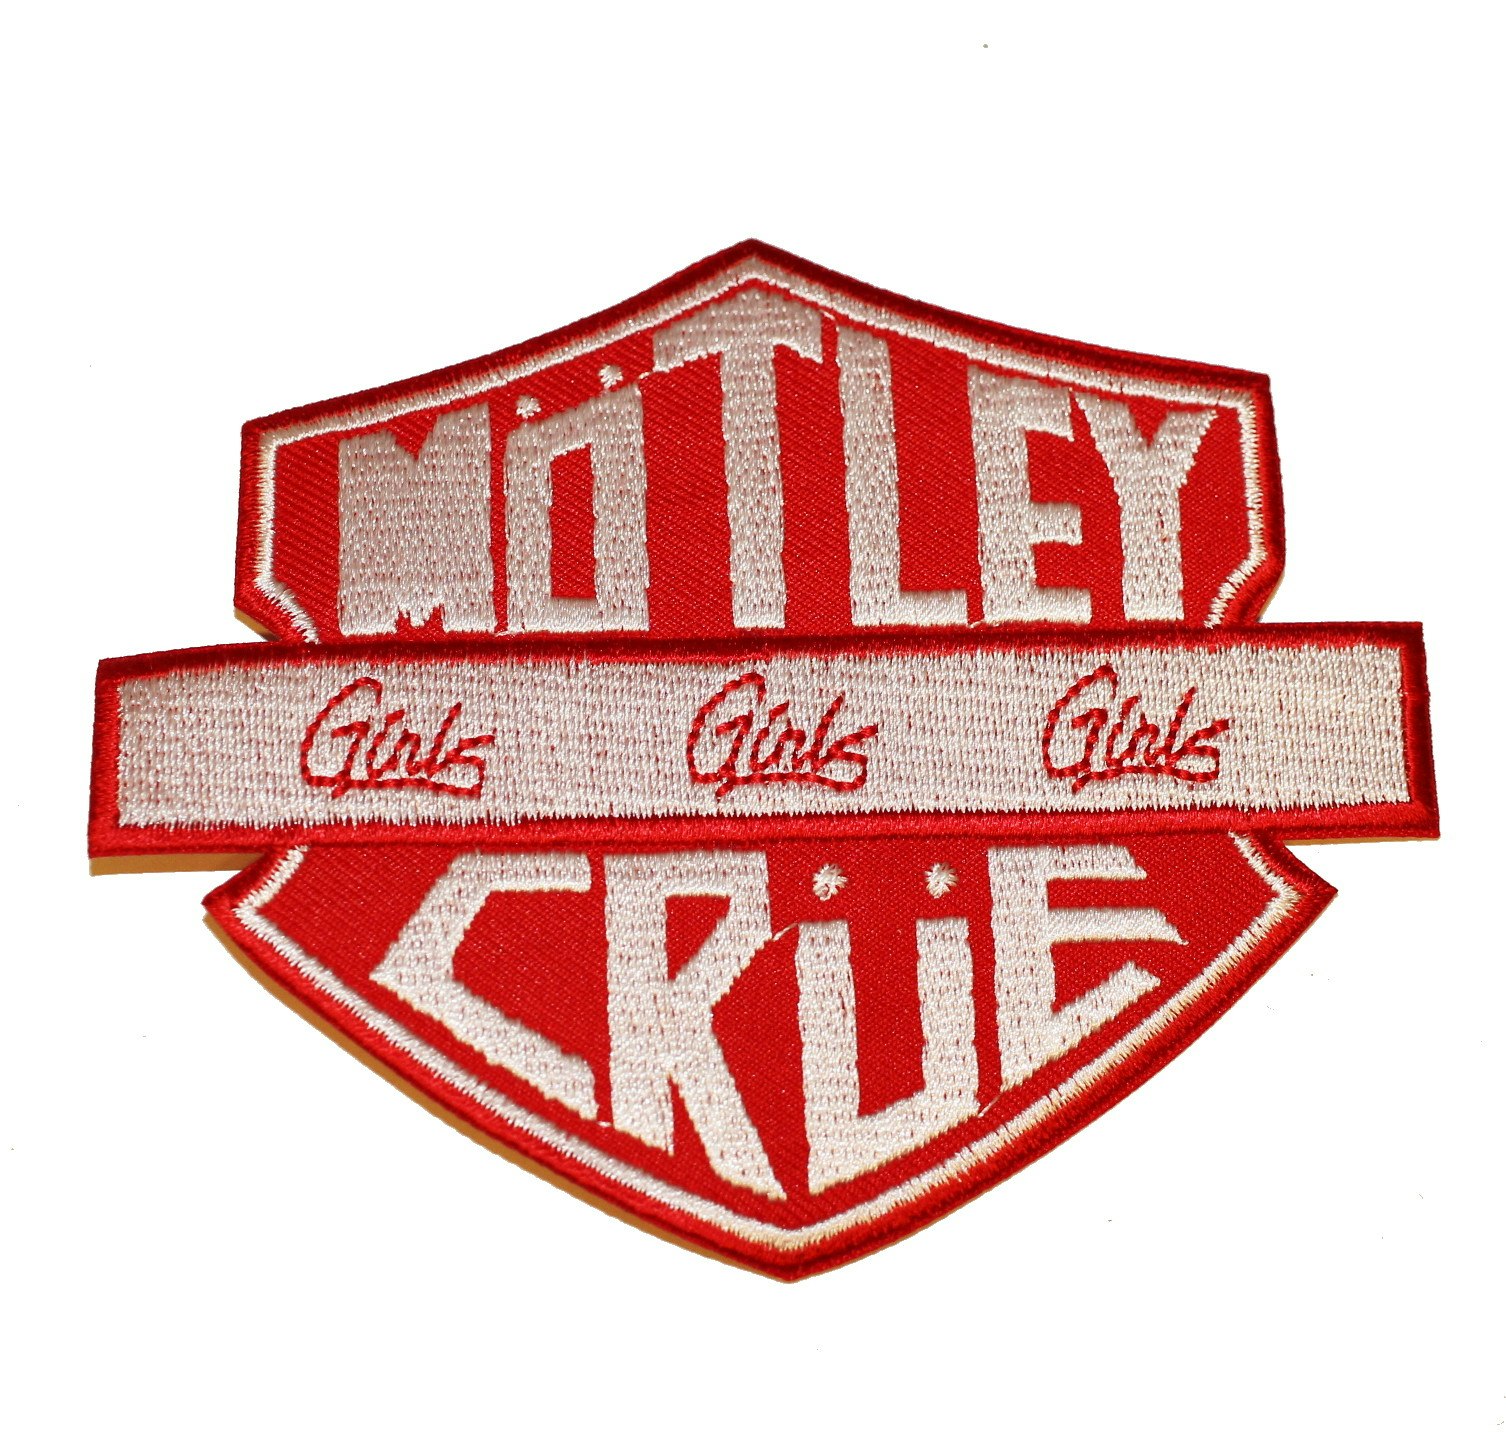 Motley crue Girls logo patch